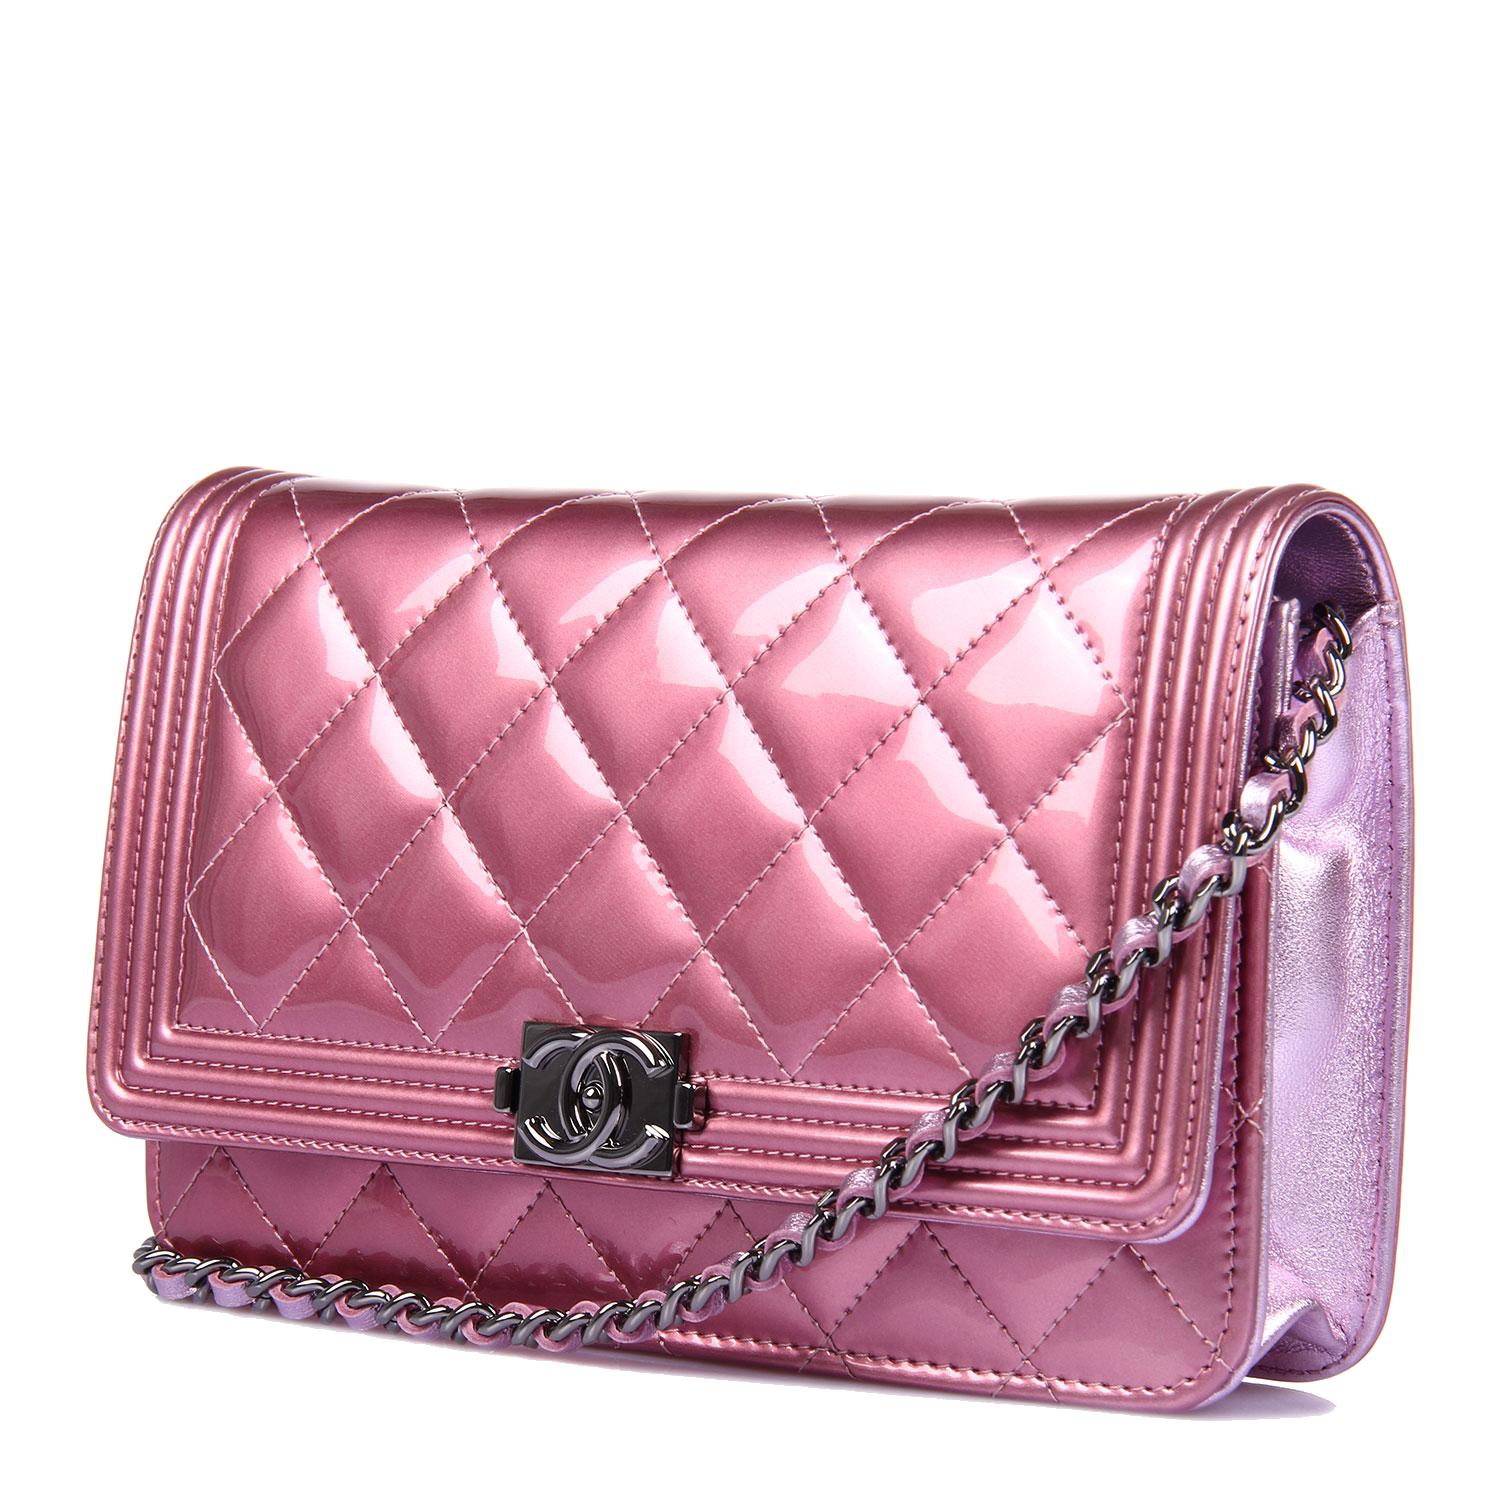 Download Pink Bag Leather Pearl Handbag Chanel HQ PNG Image | FreePNGImg